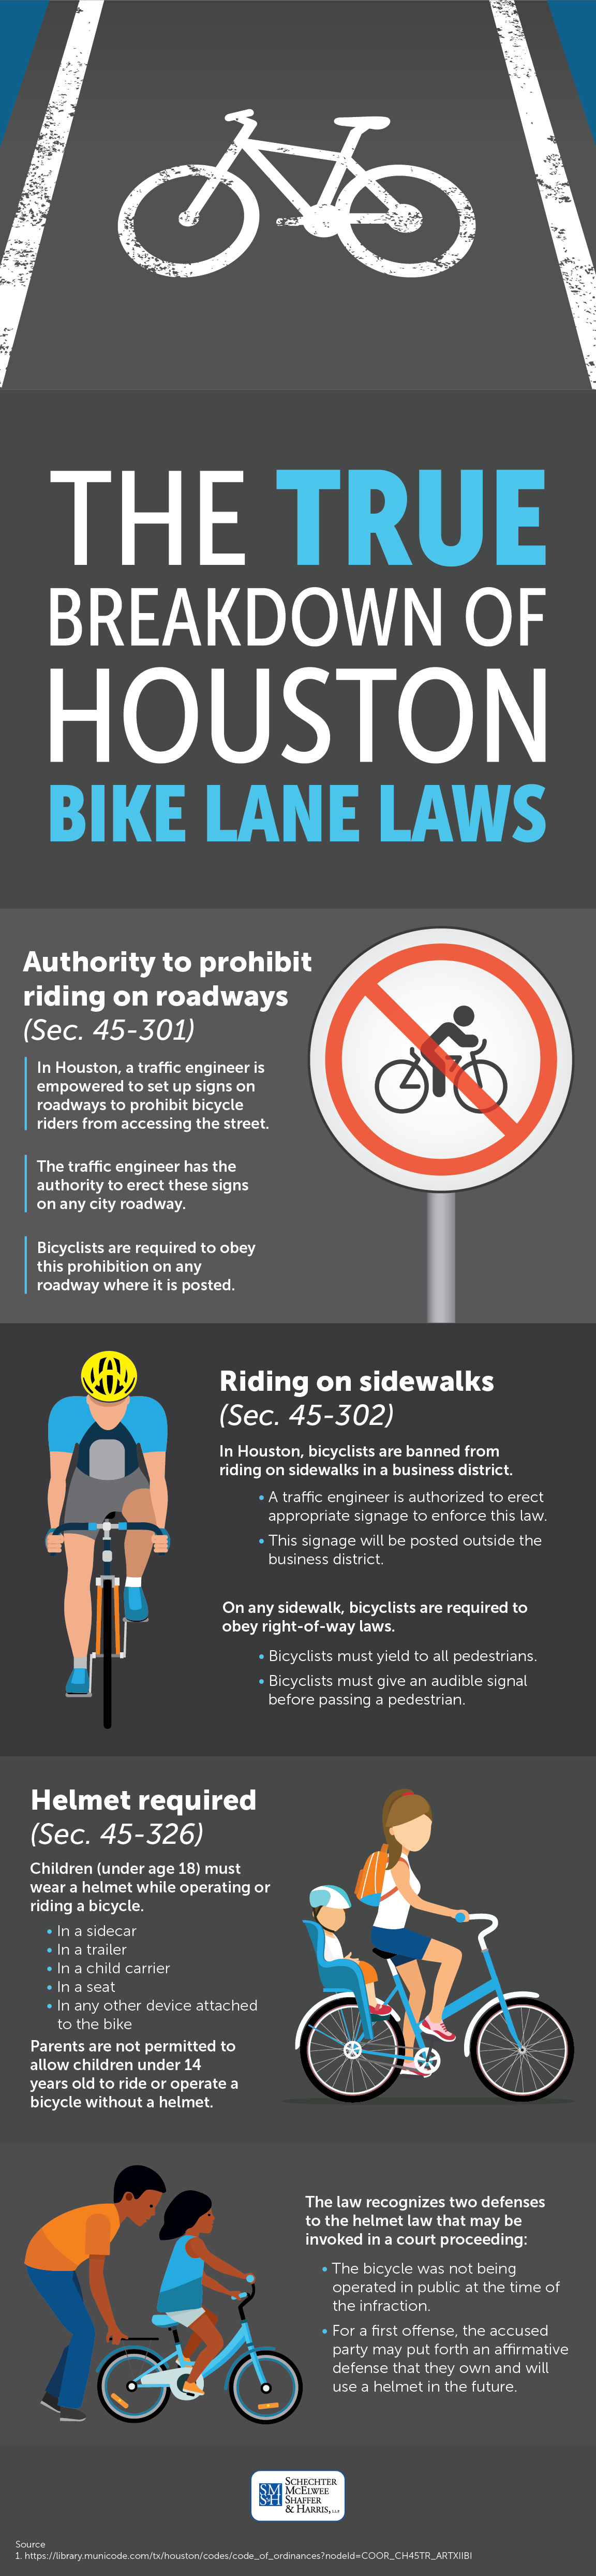 Houston Bike Lane Laws Infographic